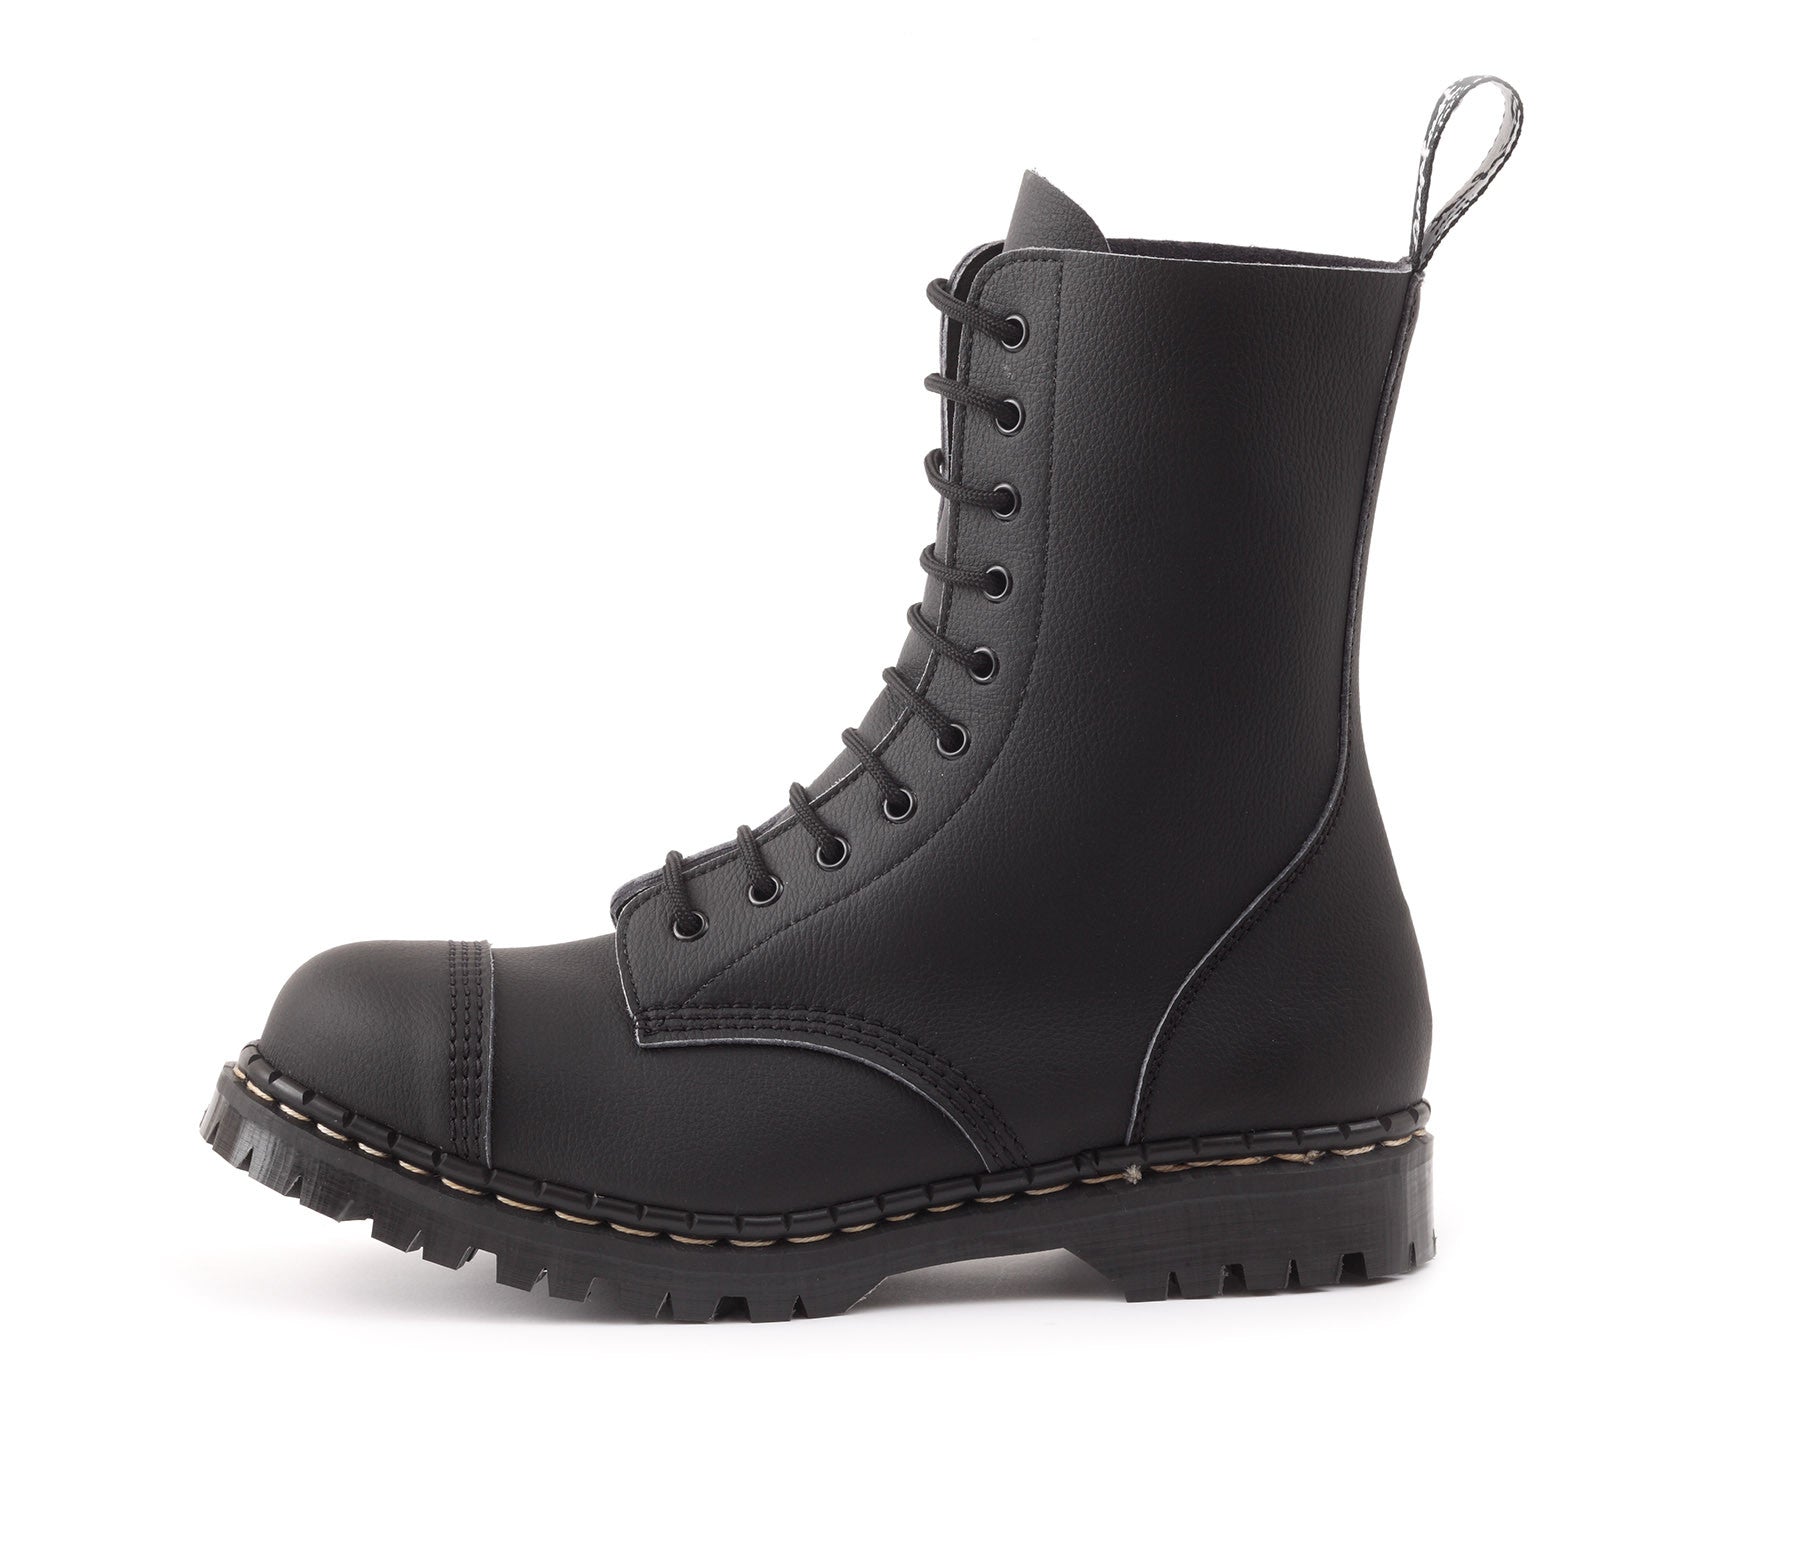 black steel toed boots